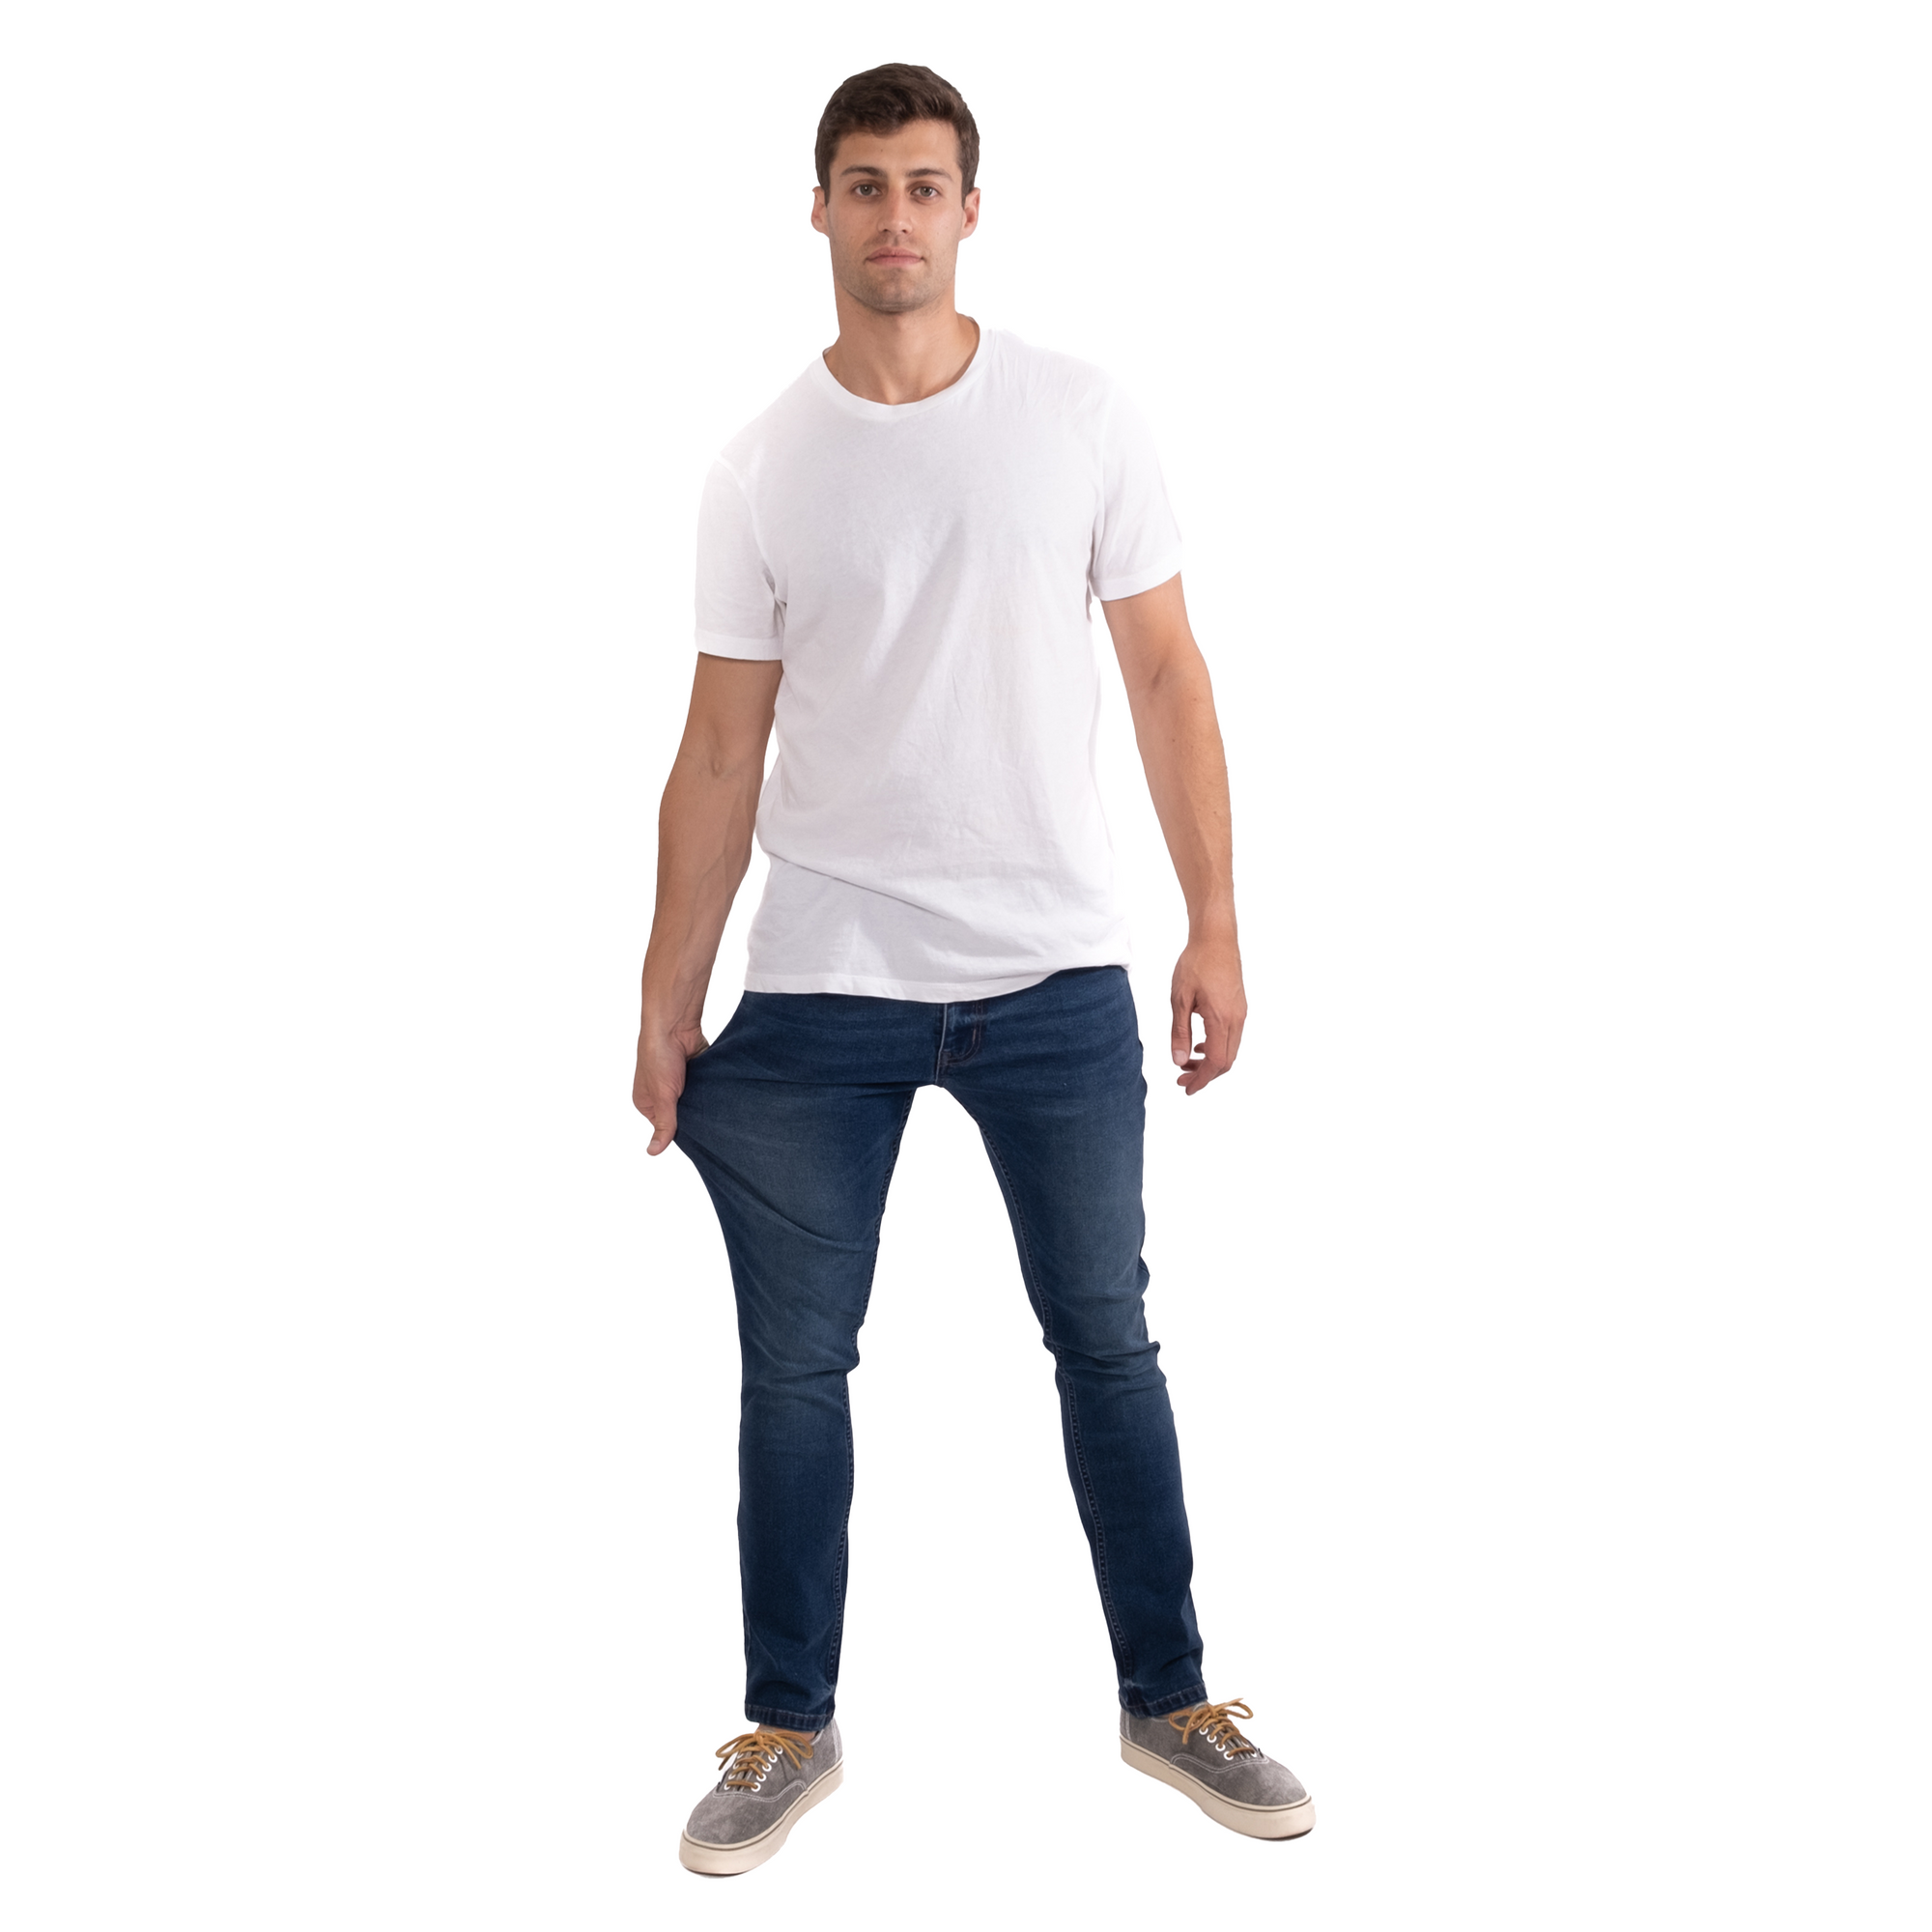 Men's 3-Pack Flex Stretch Slim Straight Jeans with 5 Pocket (Sizes